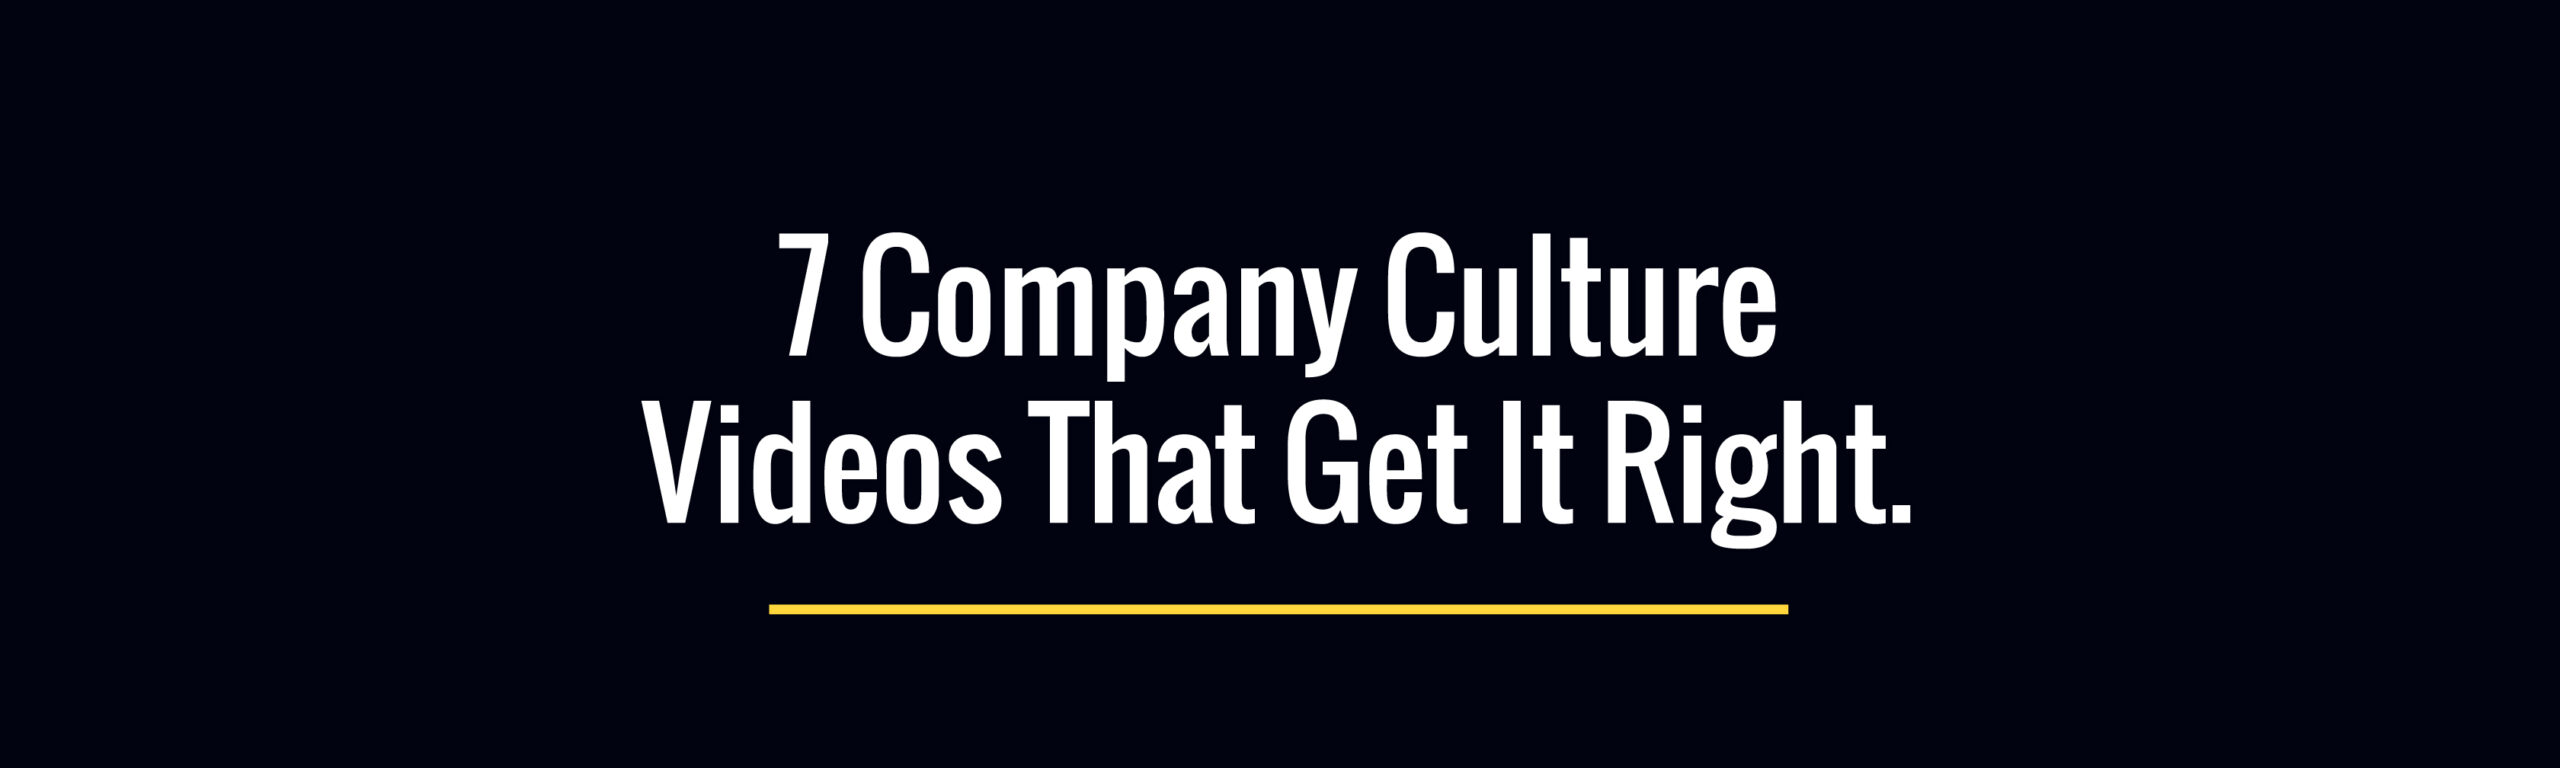 Company-Culture-Videos-bg